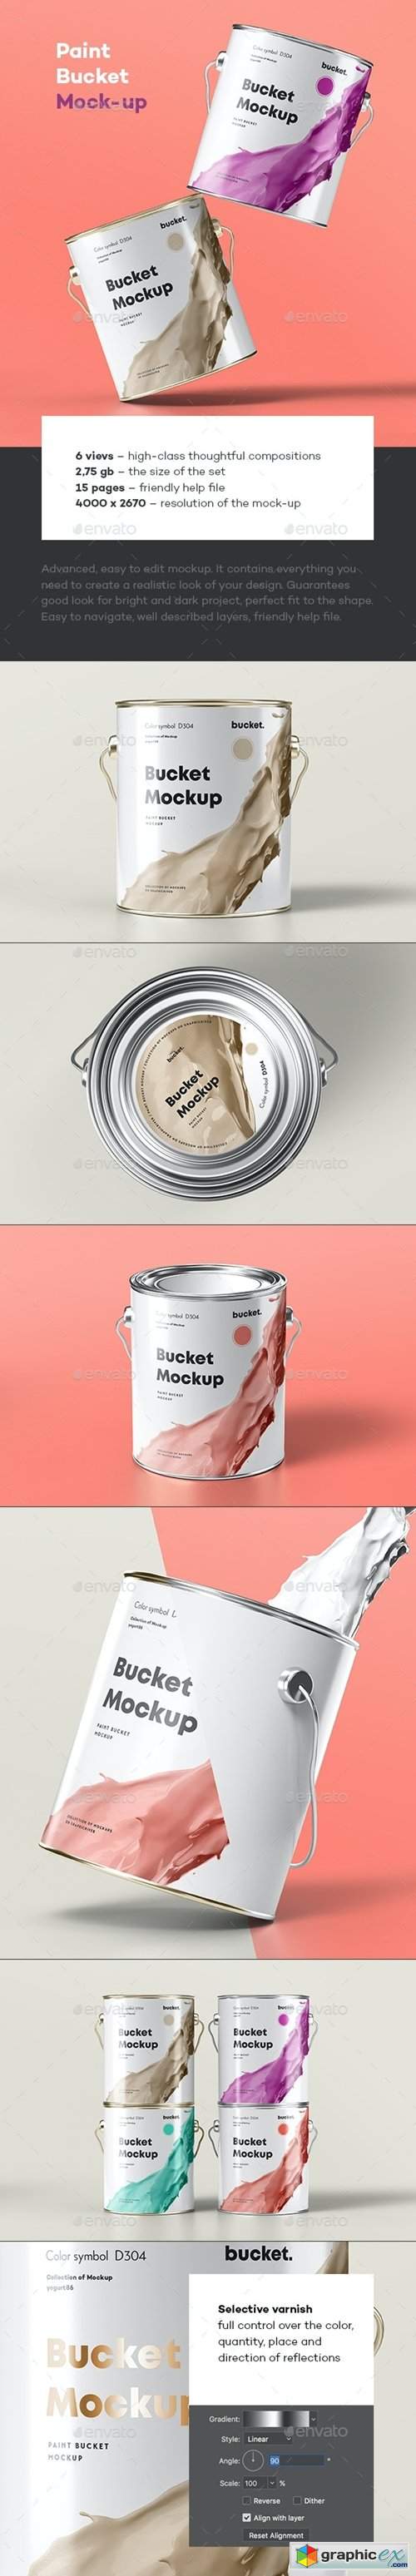 Paint Bucket Mock-up 